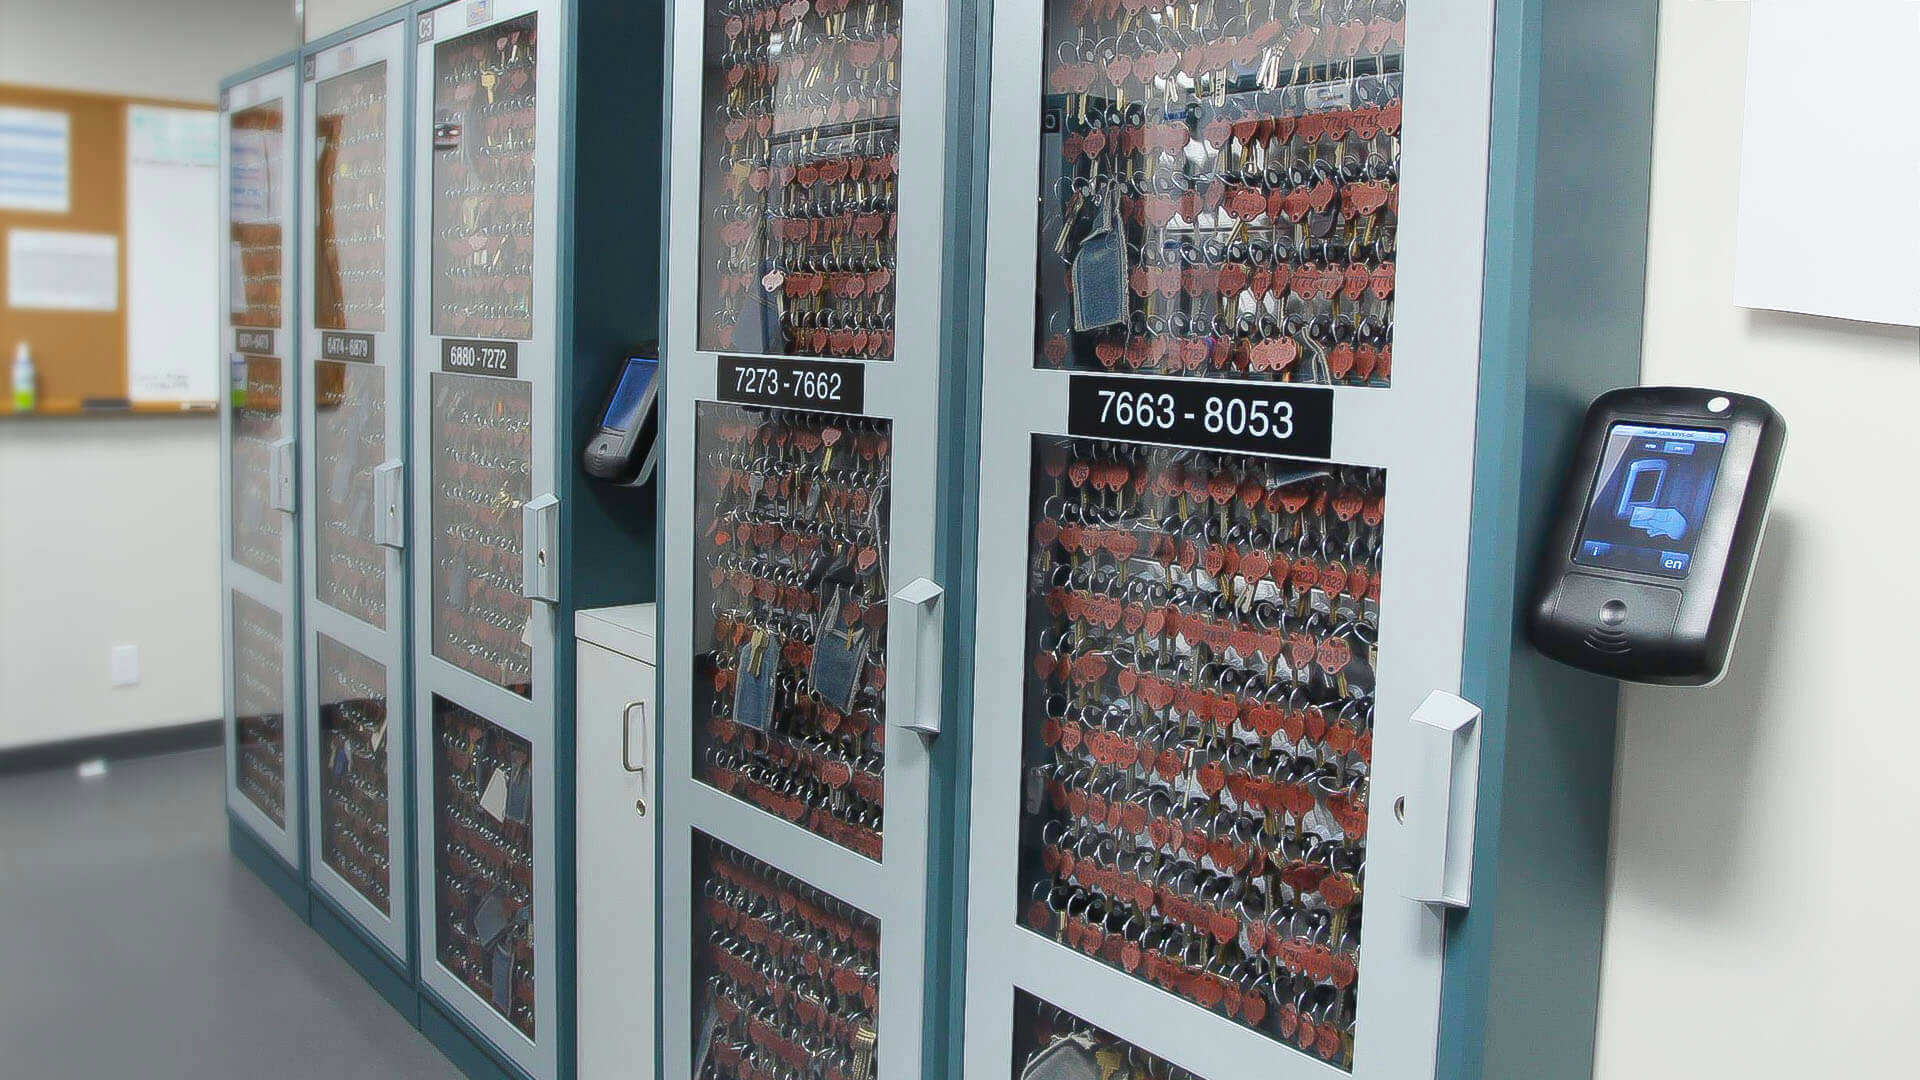 A large key management system holding thousands of keys